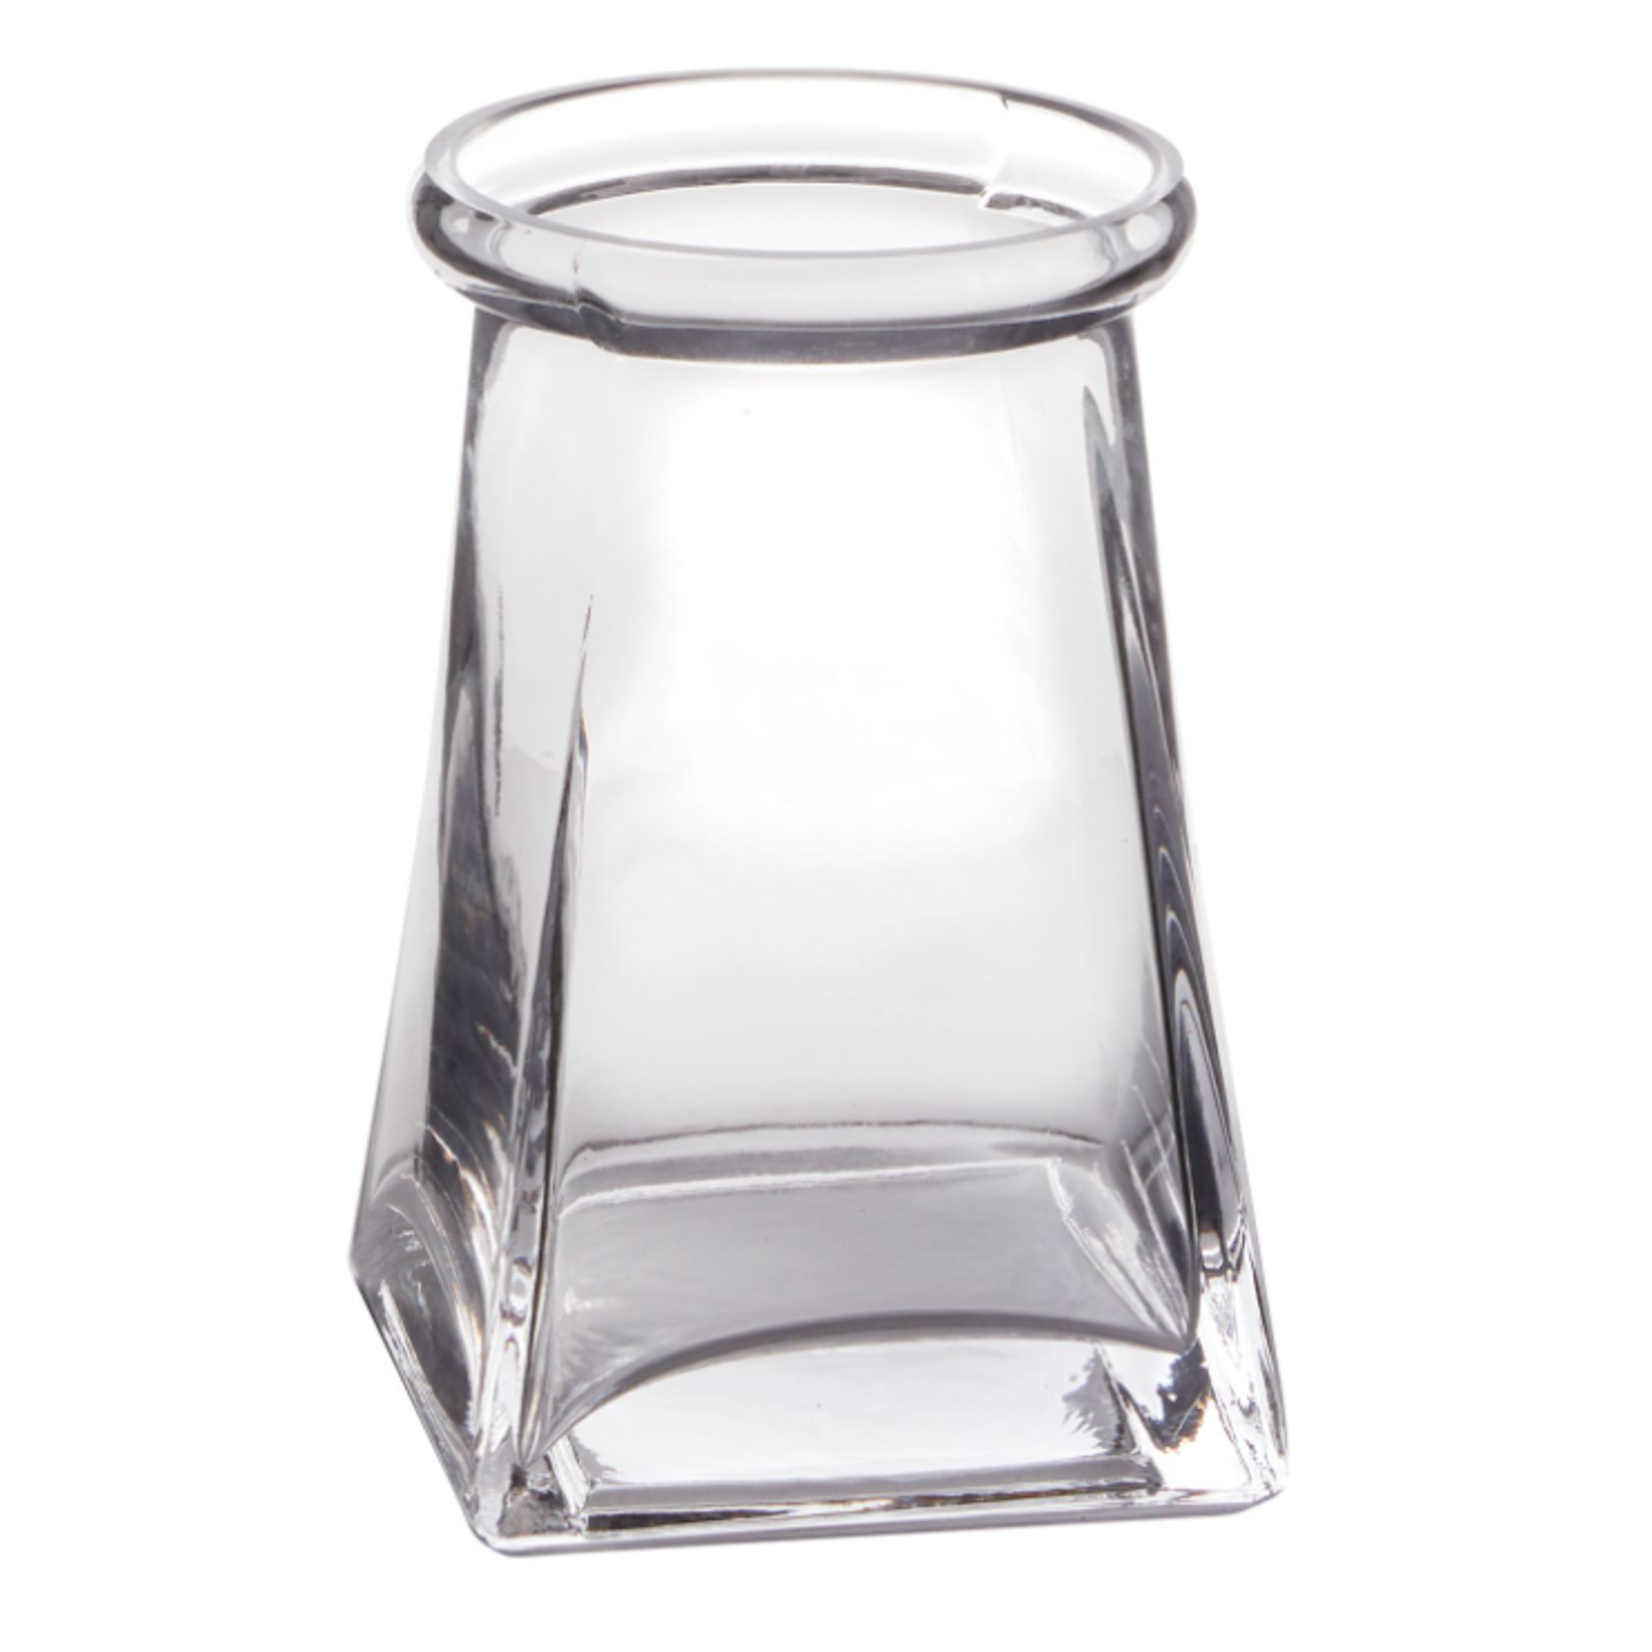 6.25”H X 4” OSLO GLASS VASE (AD)